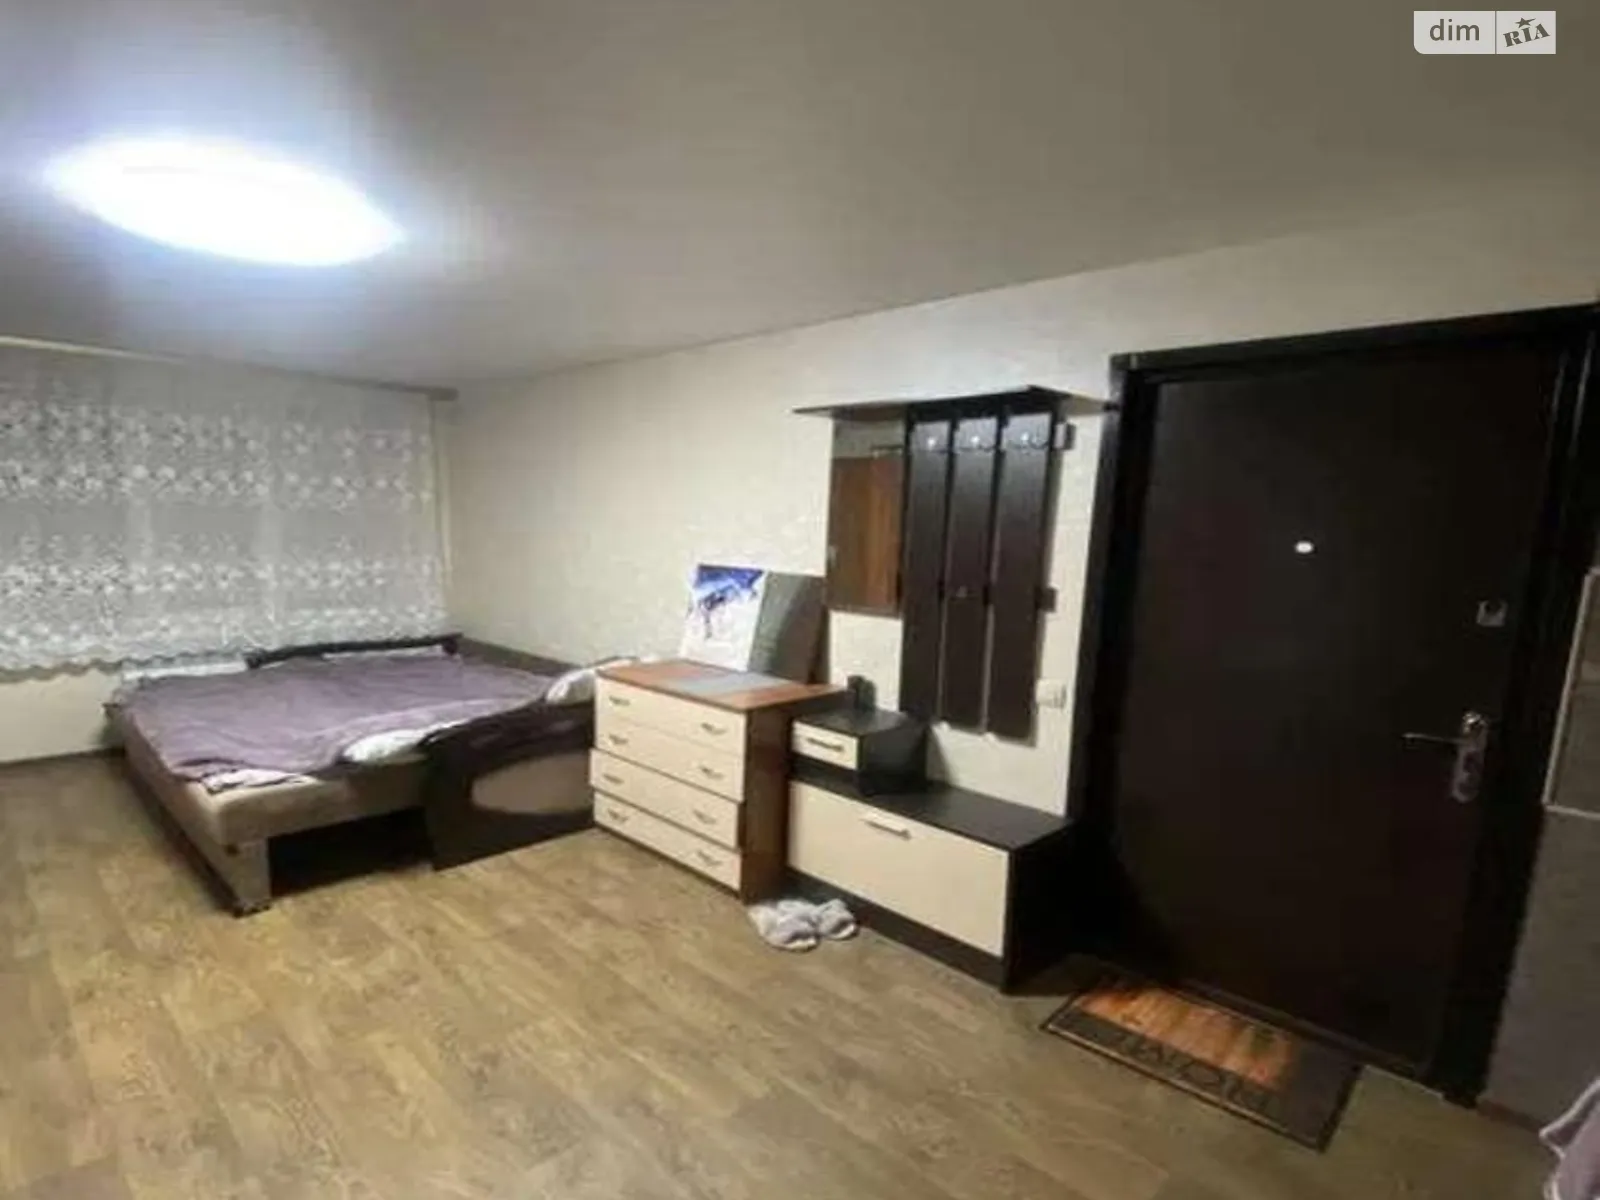 Продается комната 27 кв. м в Харькове - фото 2